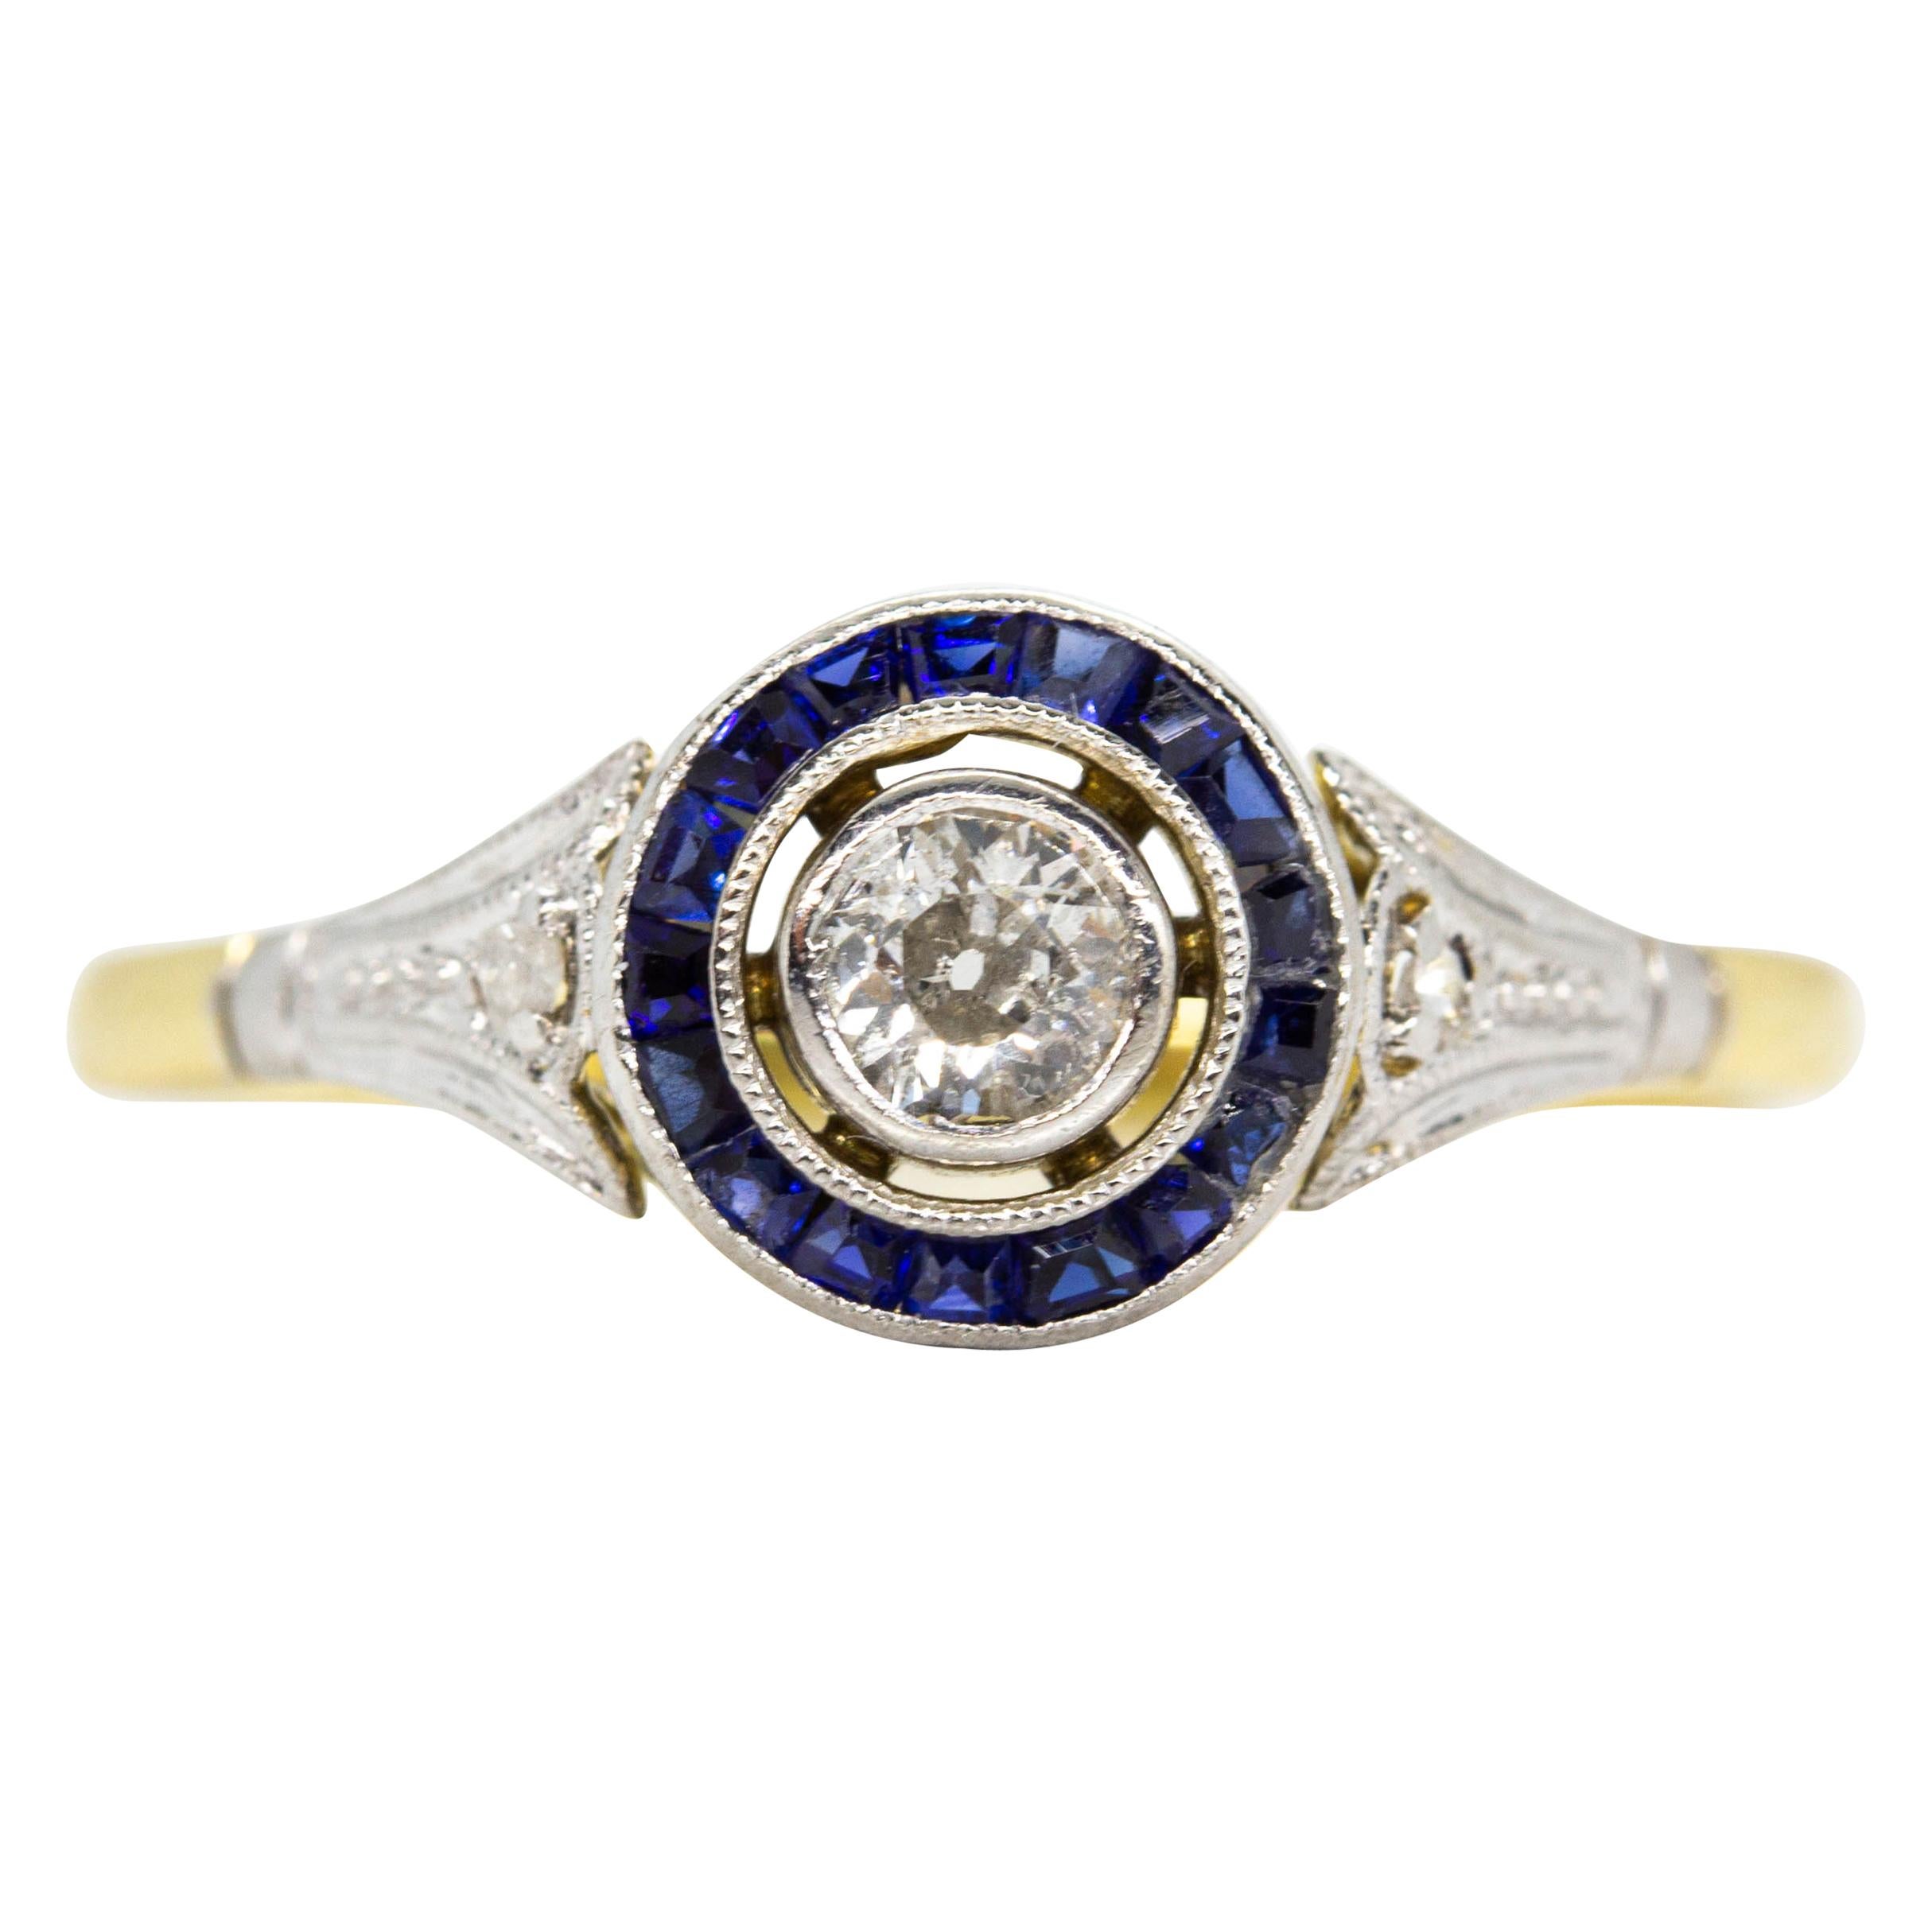 Art Deco 18 Karat Gold and Platinum Diamond and Sapphires Ring